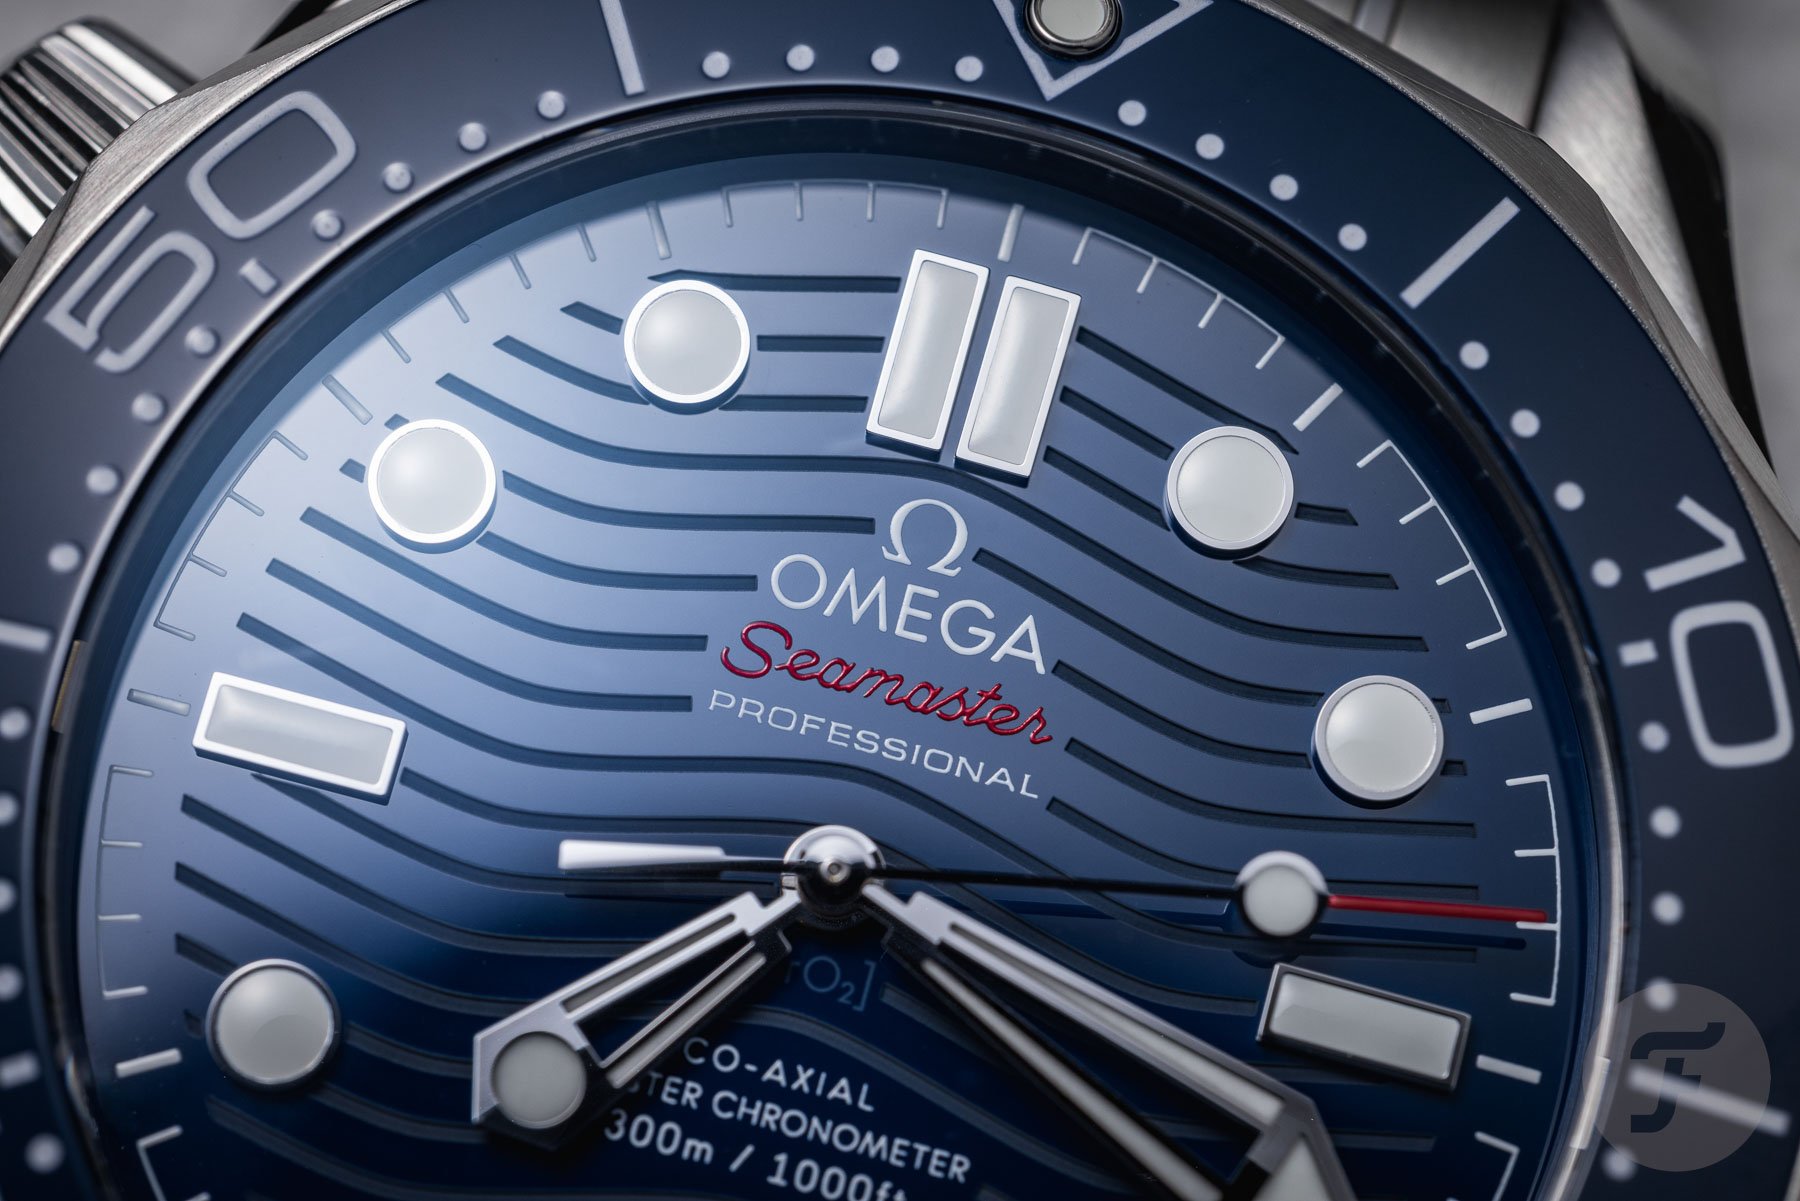 Omega Seamaster Diver 300M blue dial close-up